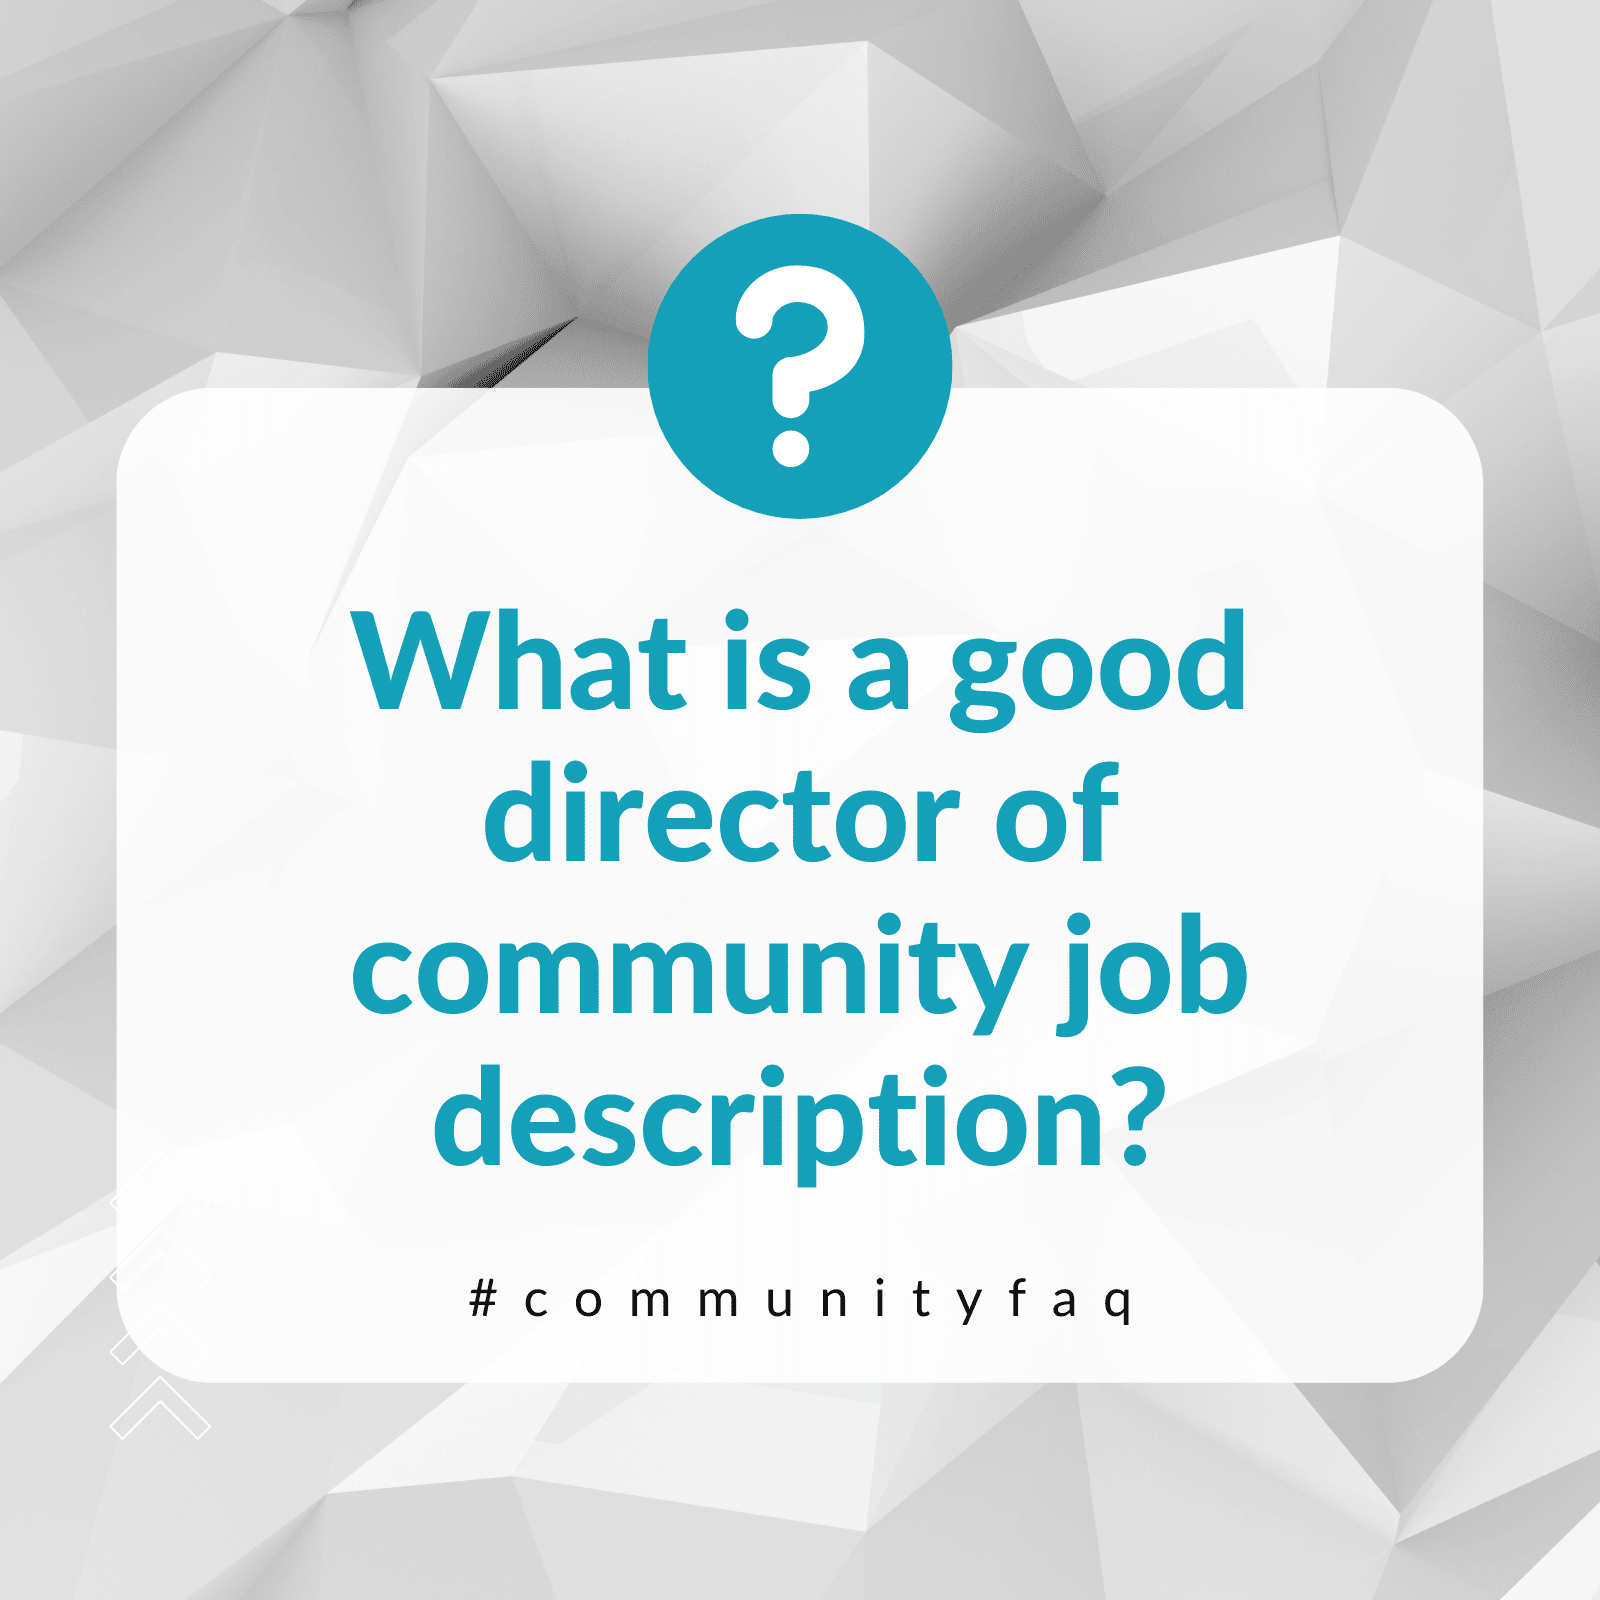 What is a good director of community job description?